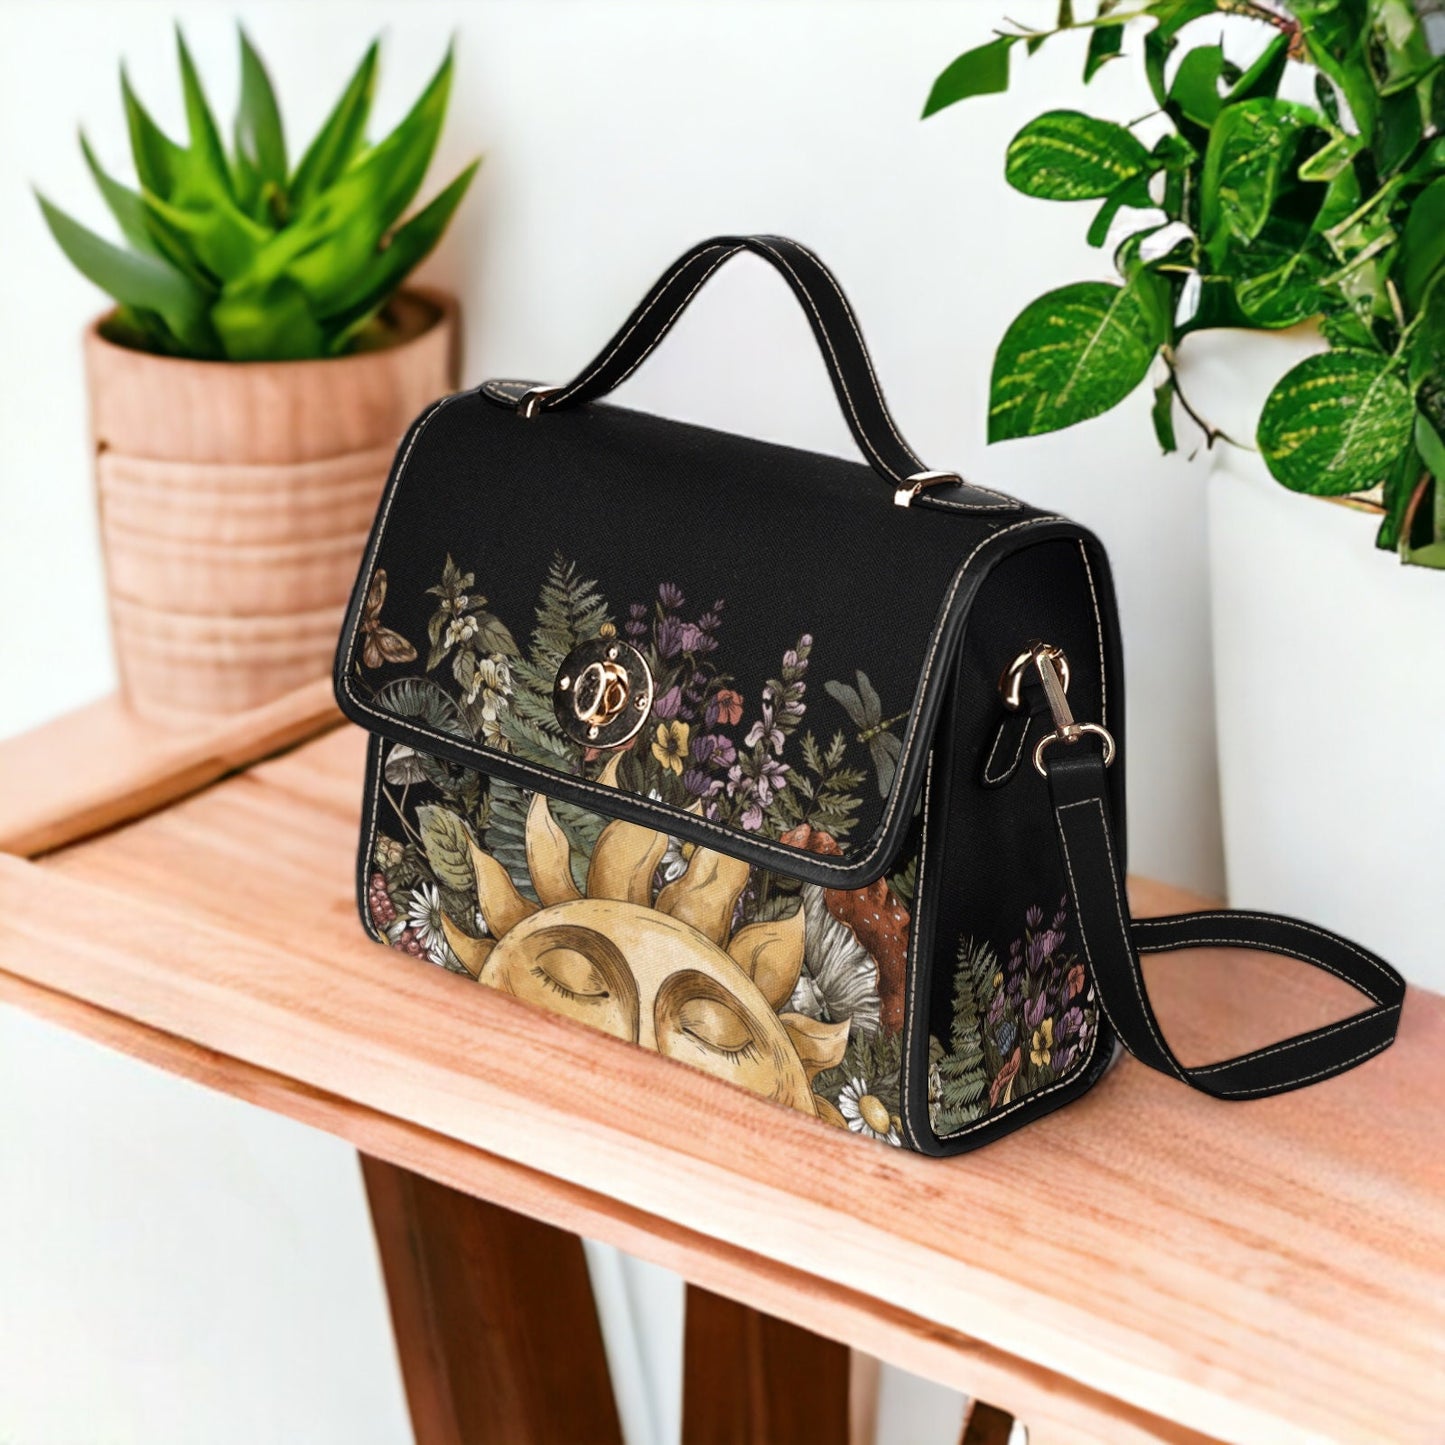 a black handbag with a floral design on it